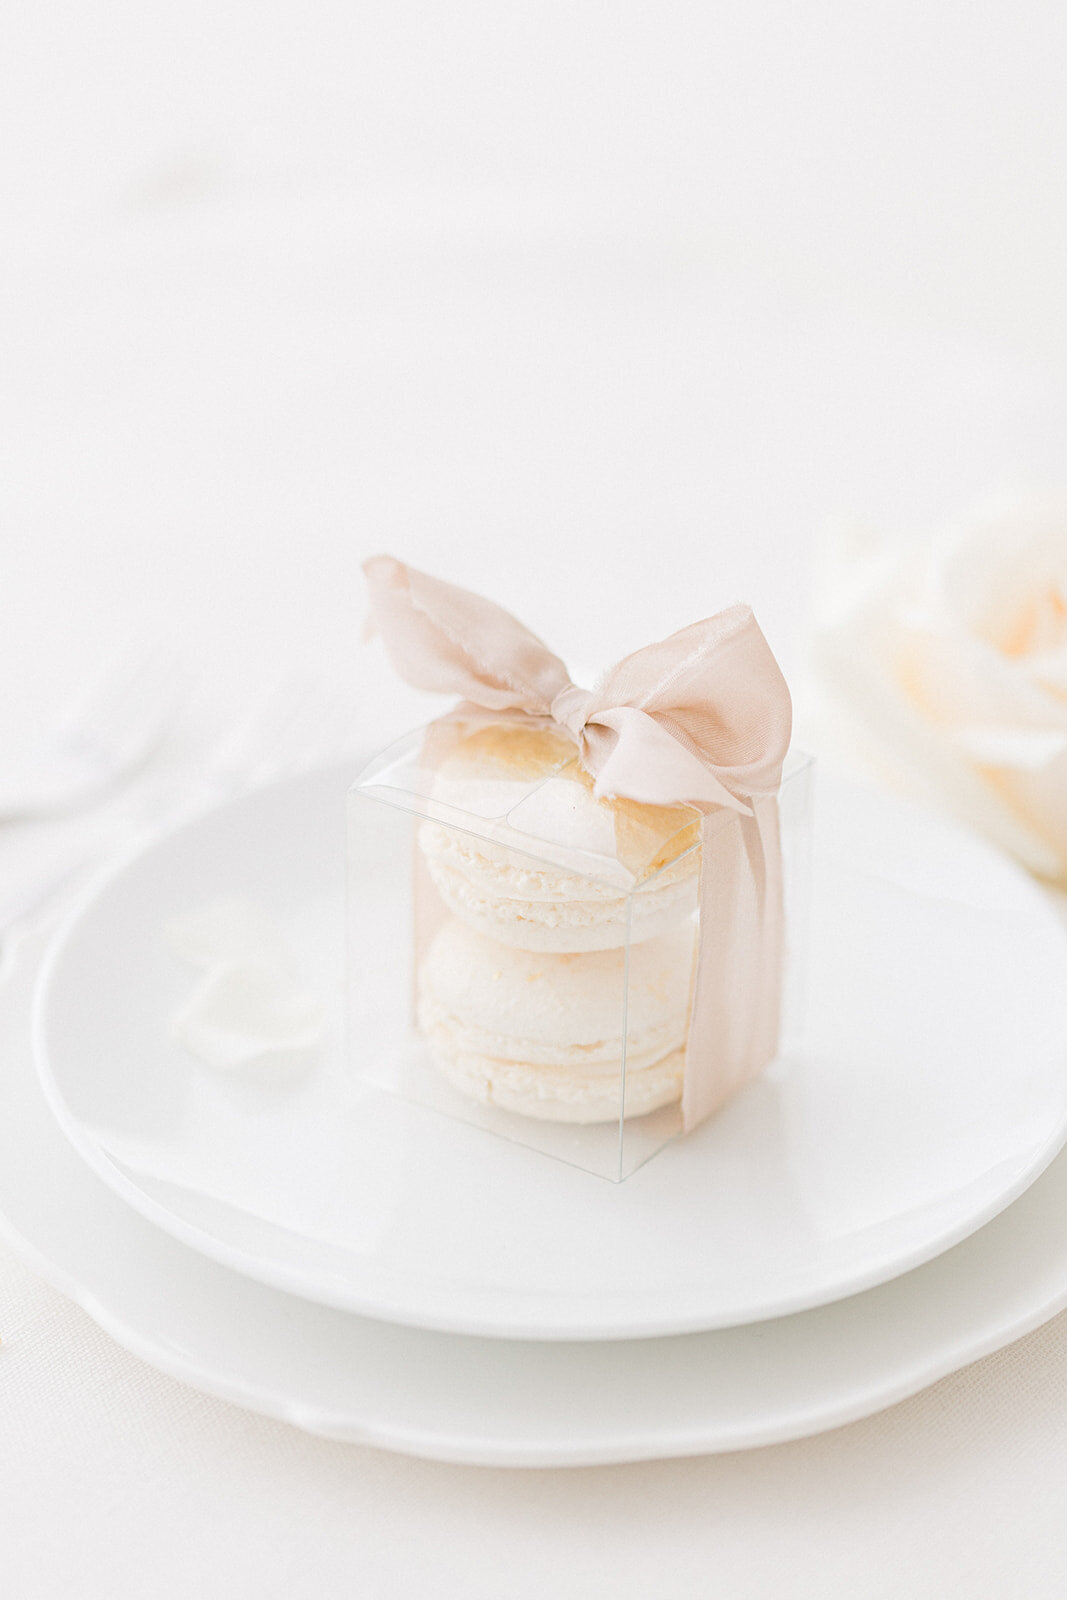 Bespoke edible wedding favours macarons Oxfordshire